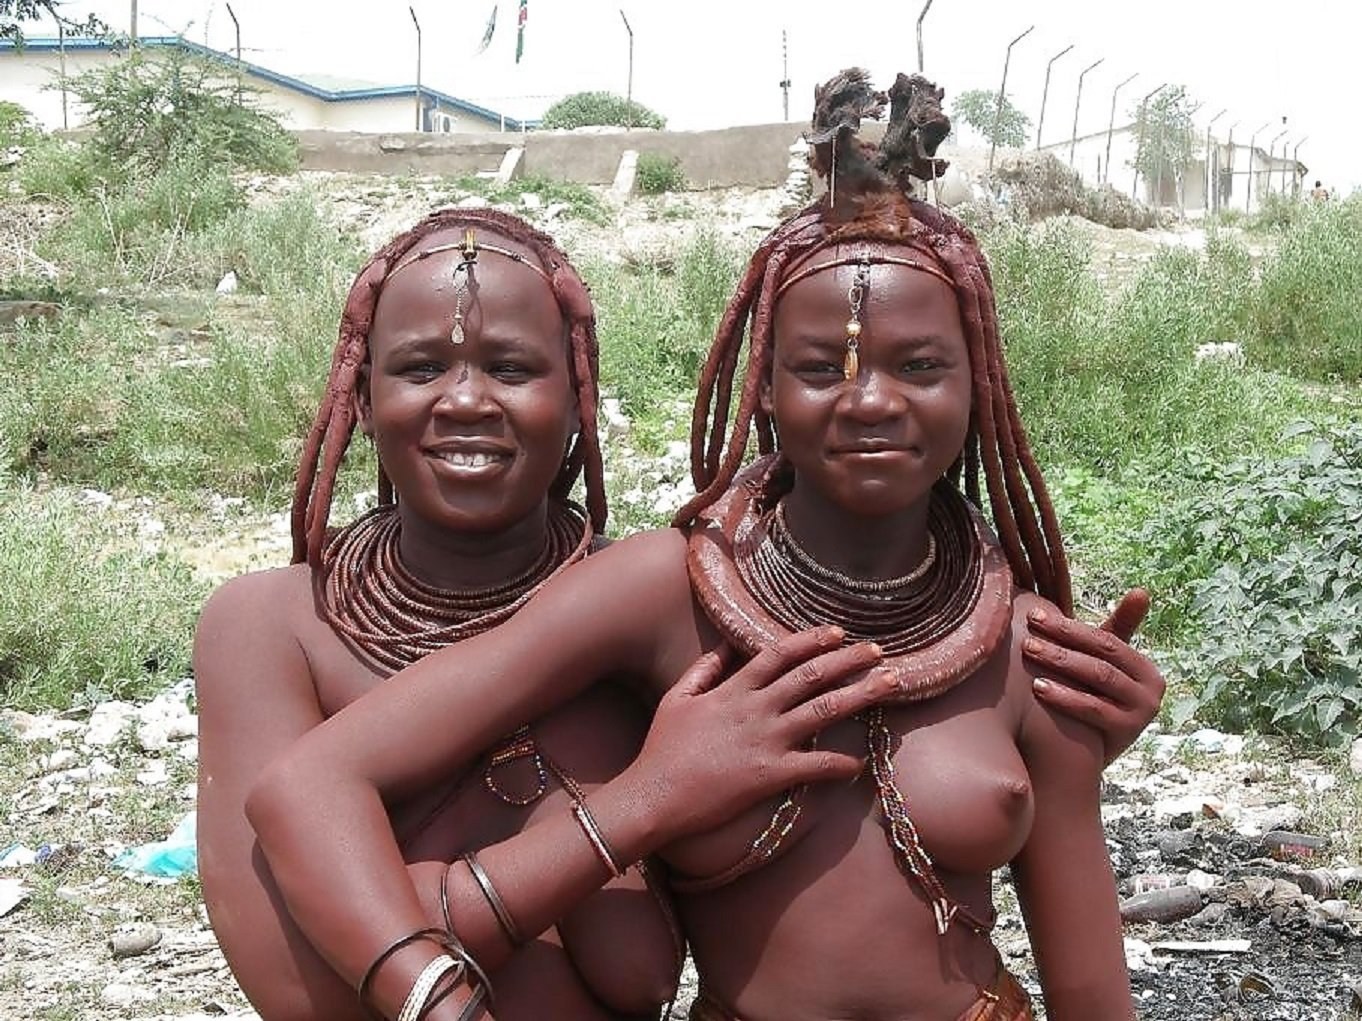 Tribal porn